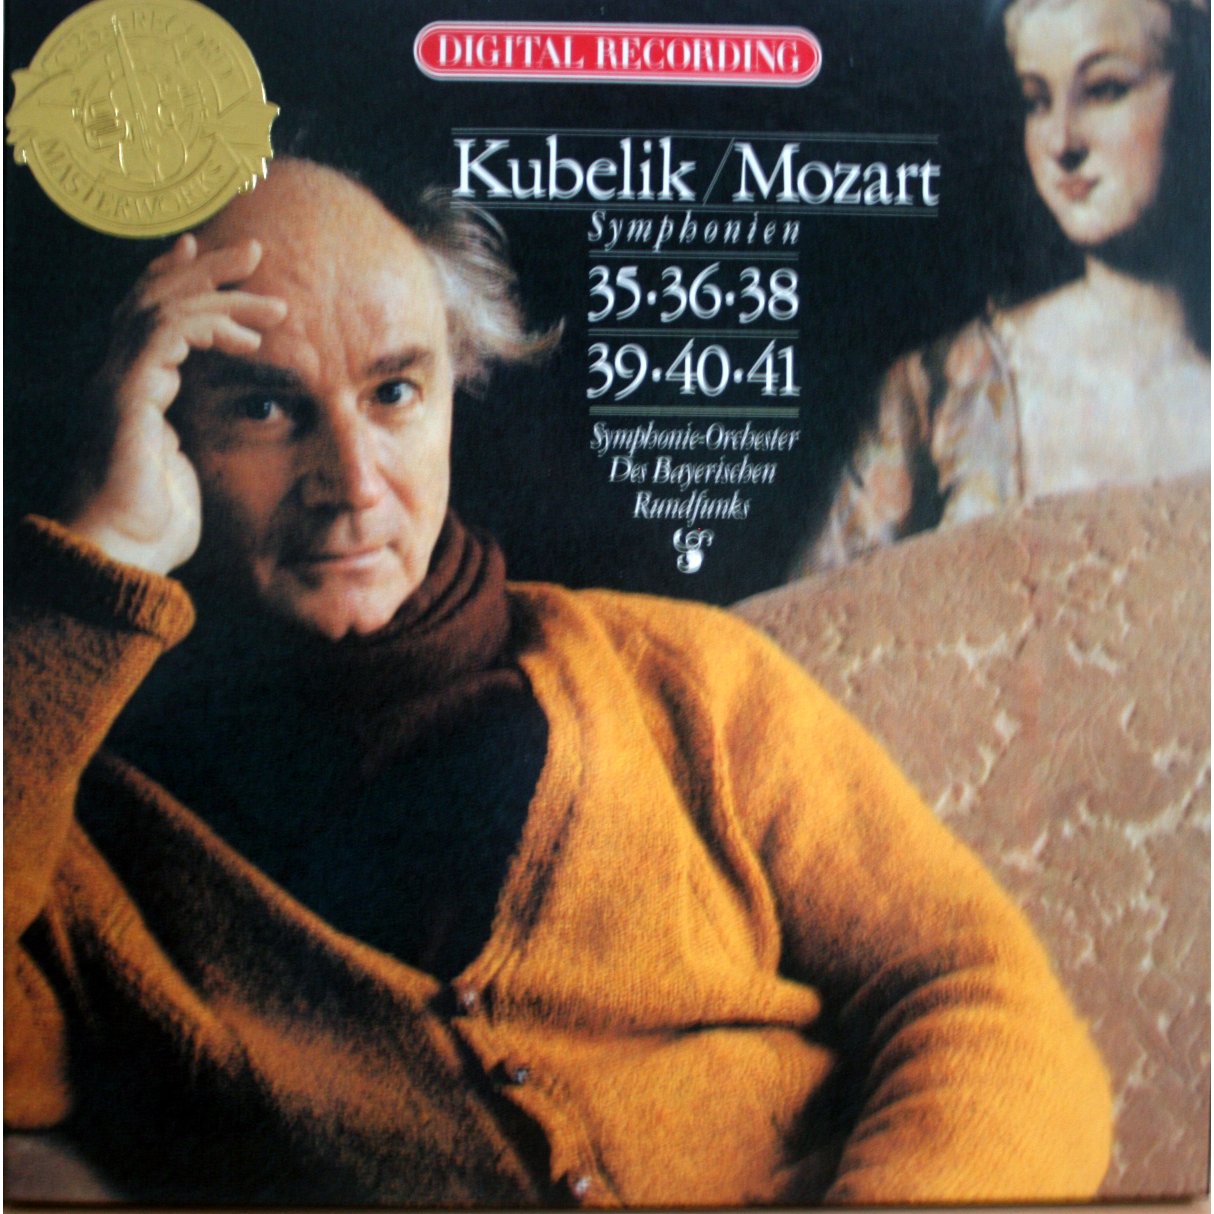 Kubelik / Bavarian Radio Symphony Orchestra - MOZART: Symphony No.35, 36, 38, 39, 40, 41 - CBS D3 36930